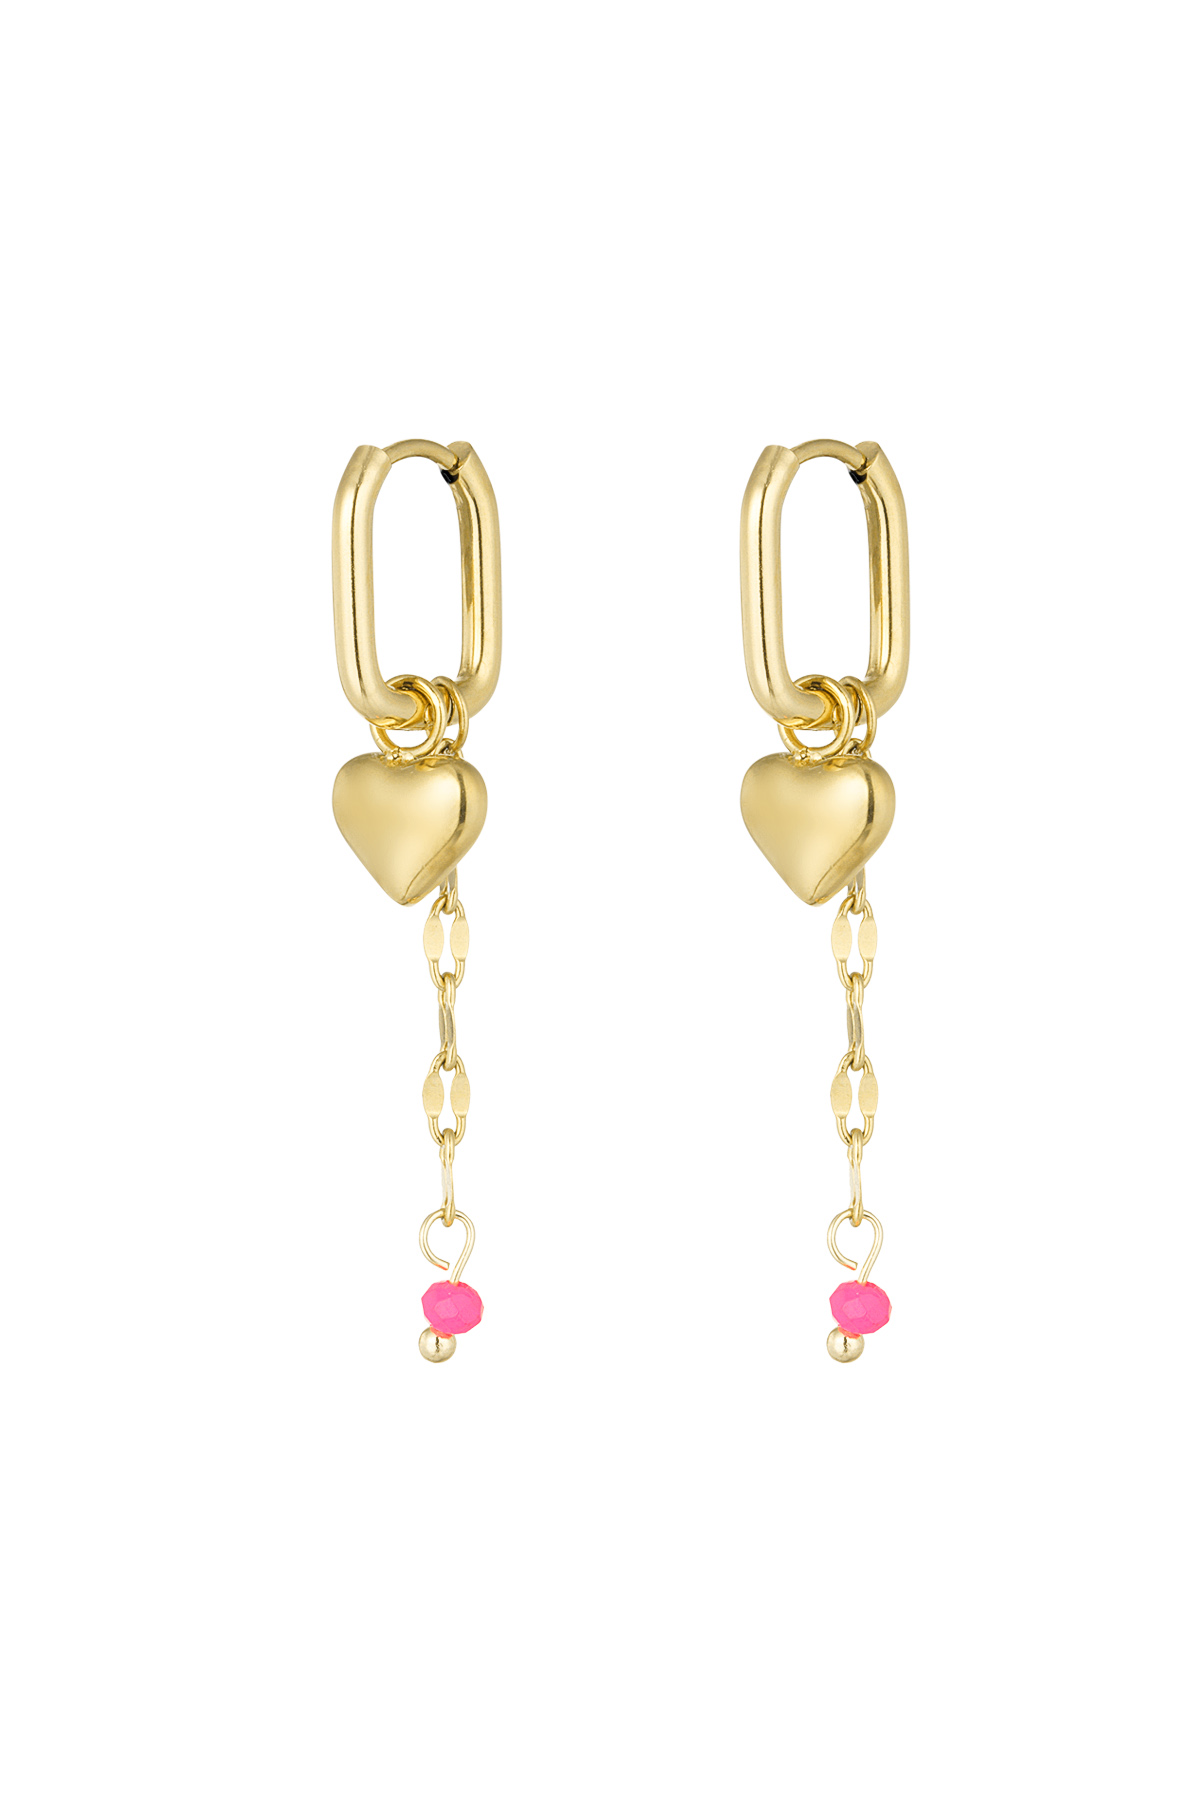 Forever love earrings - pink/gold  h5 